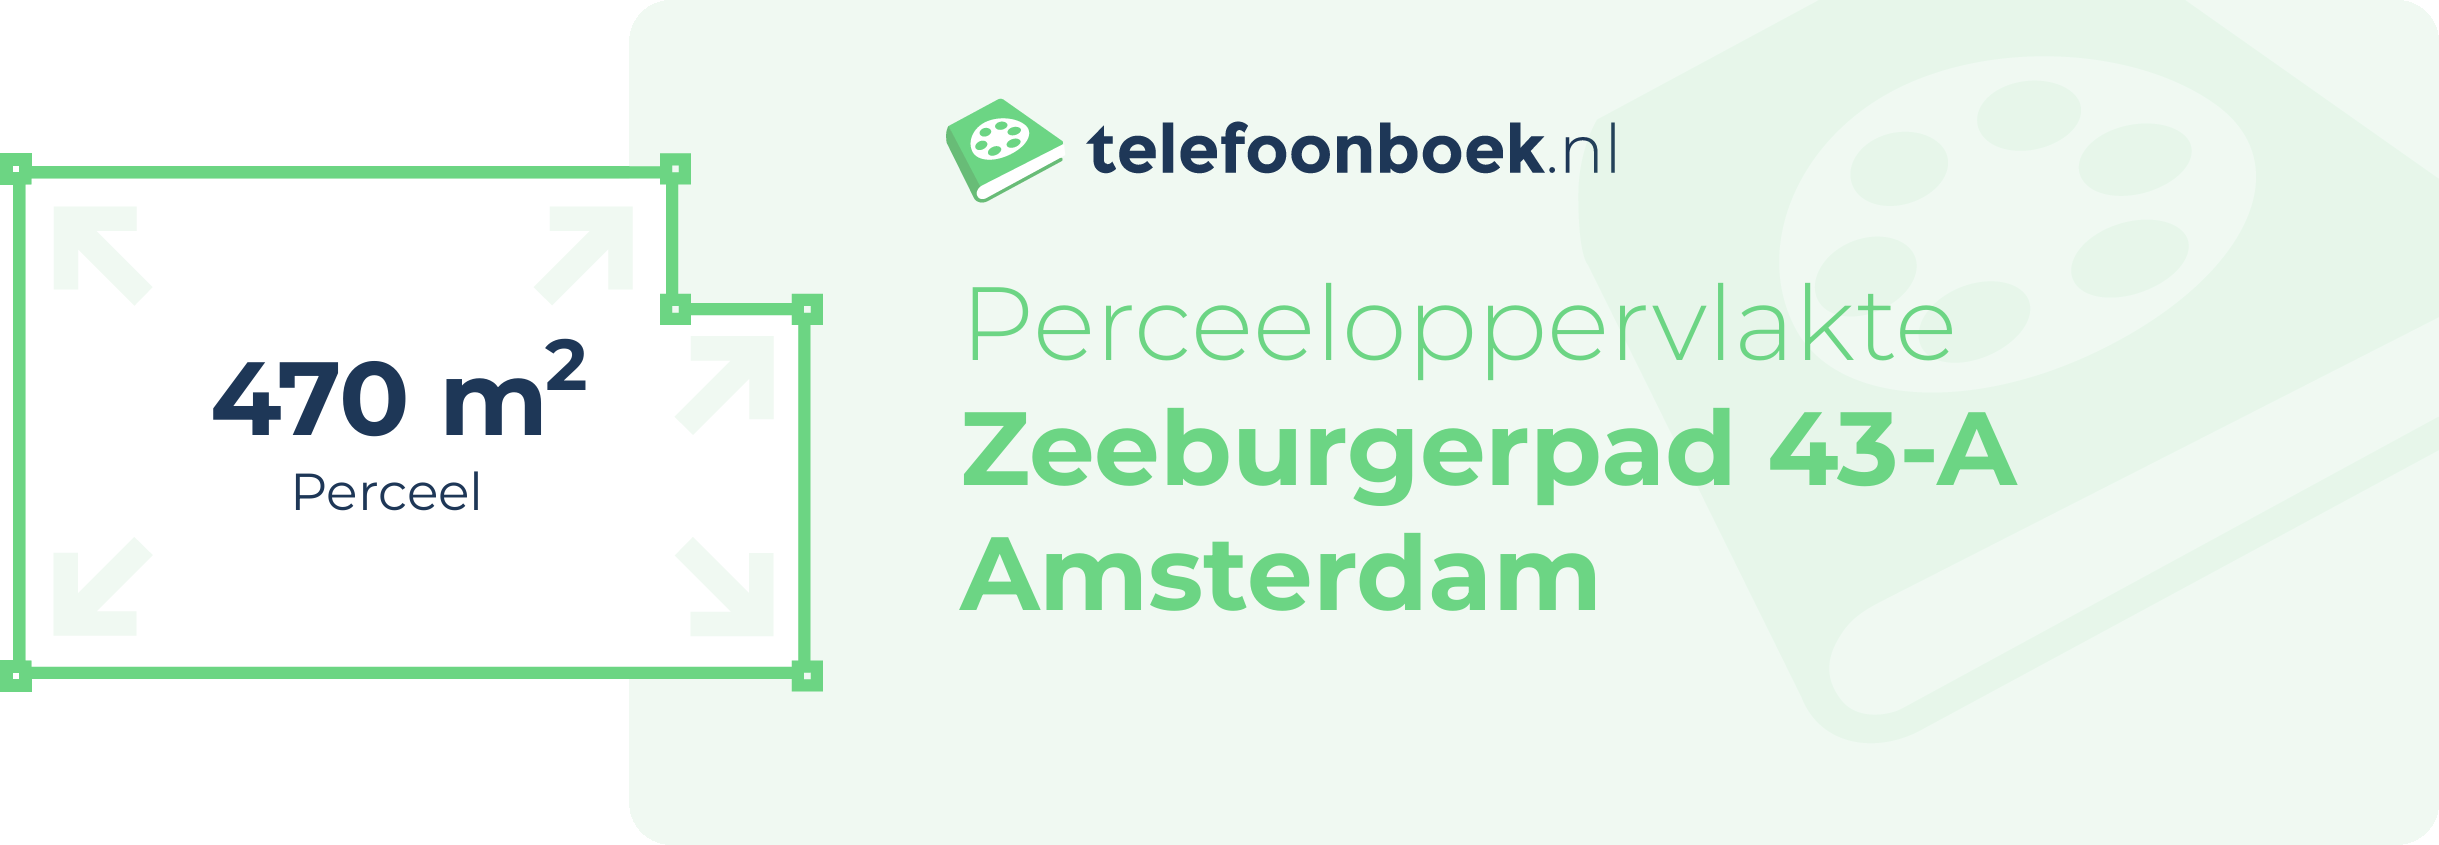 Perceeloppervlakte Zeeburgerpad 43-A Amsterdam